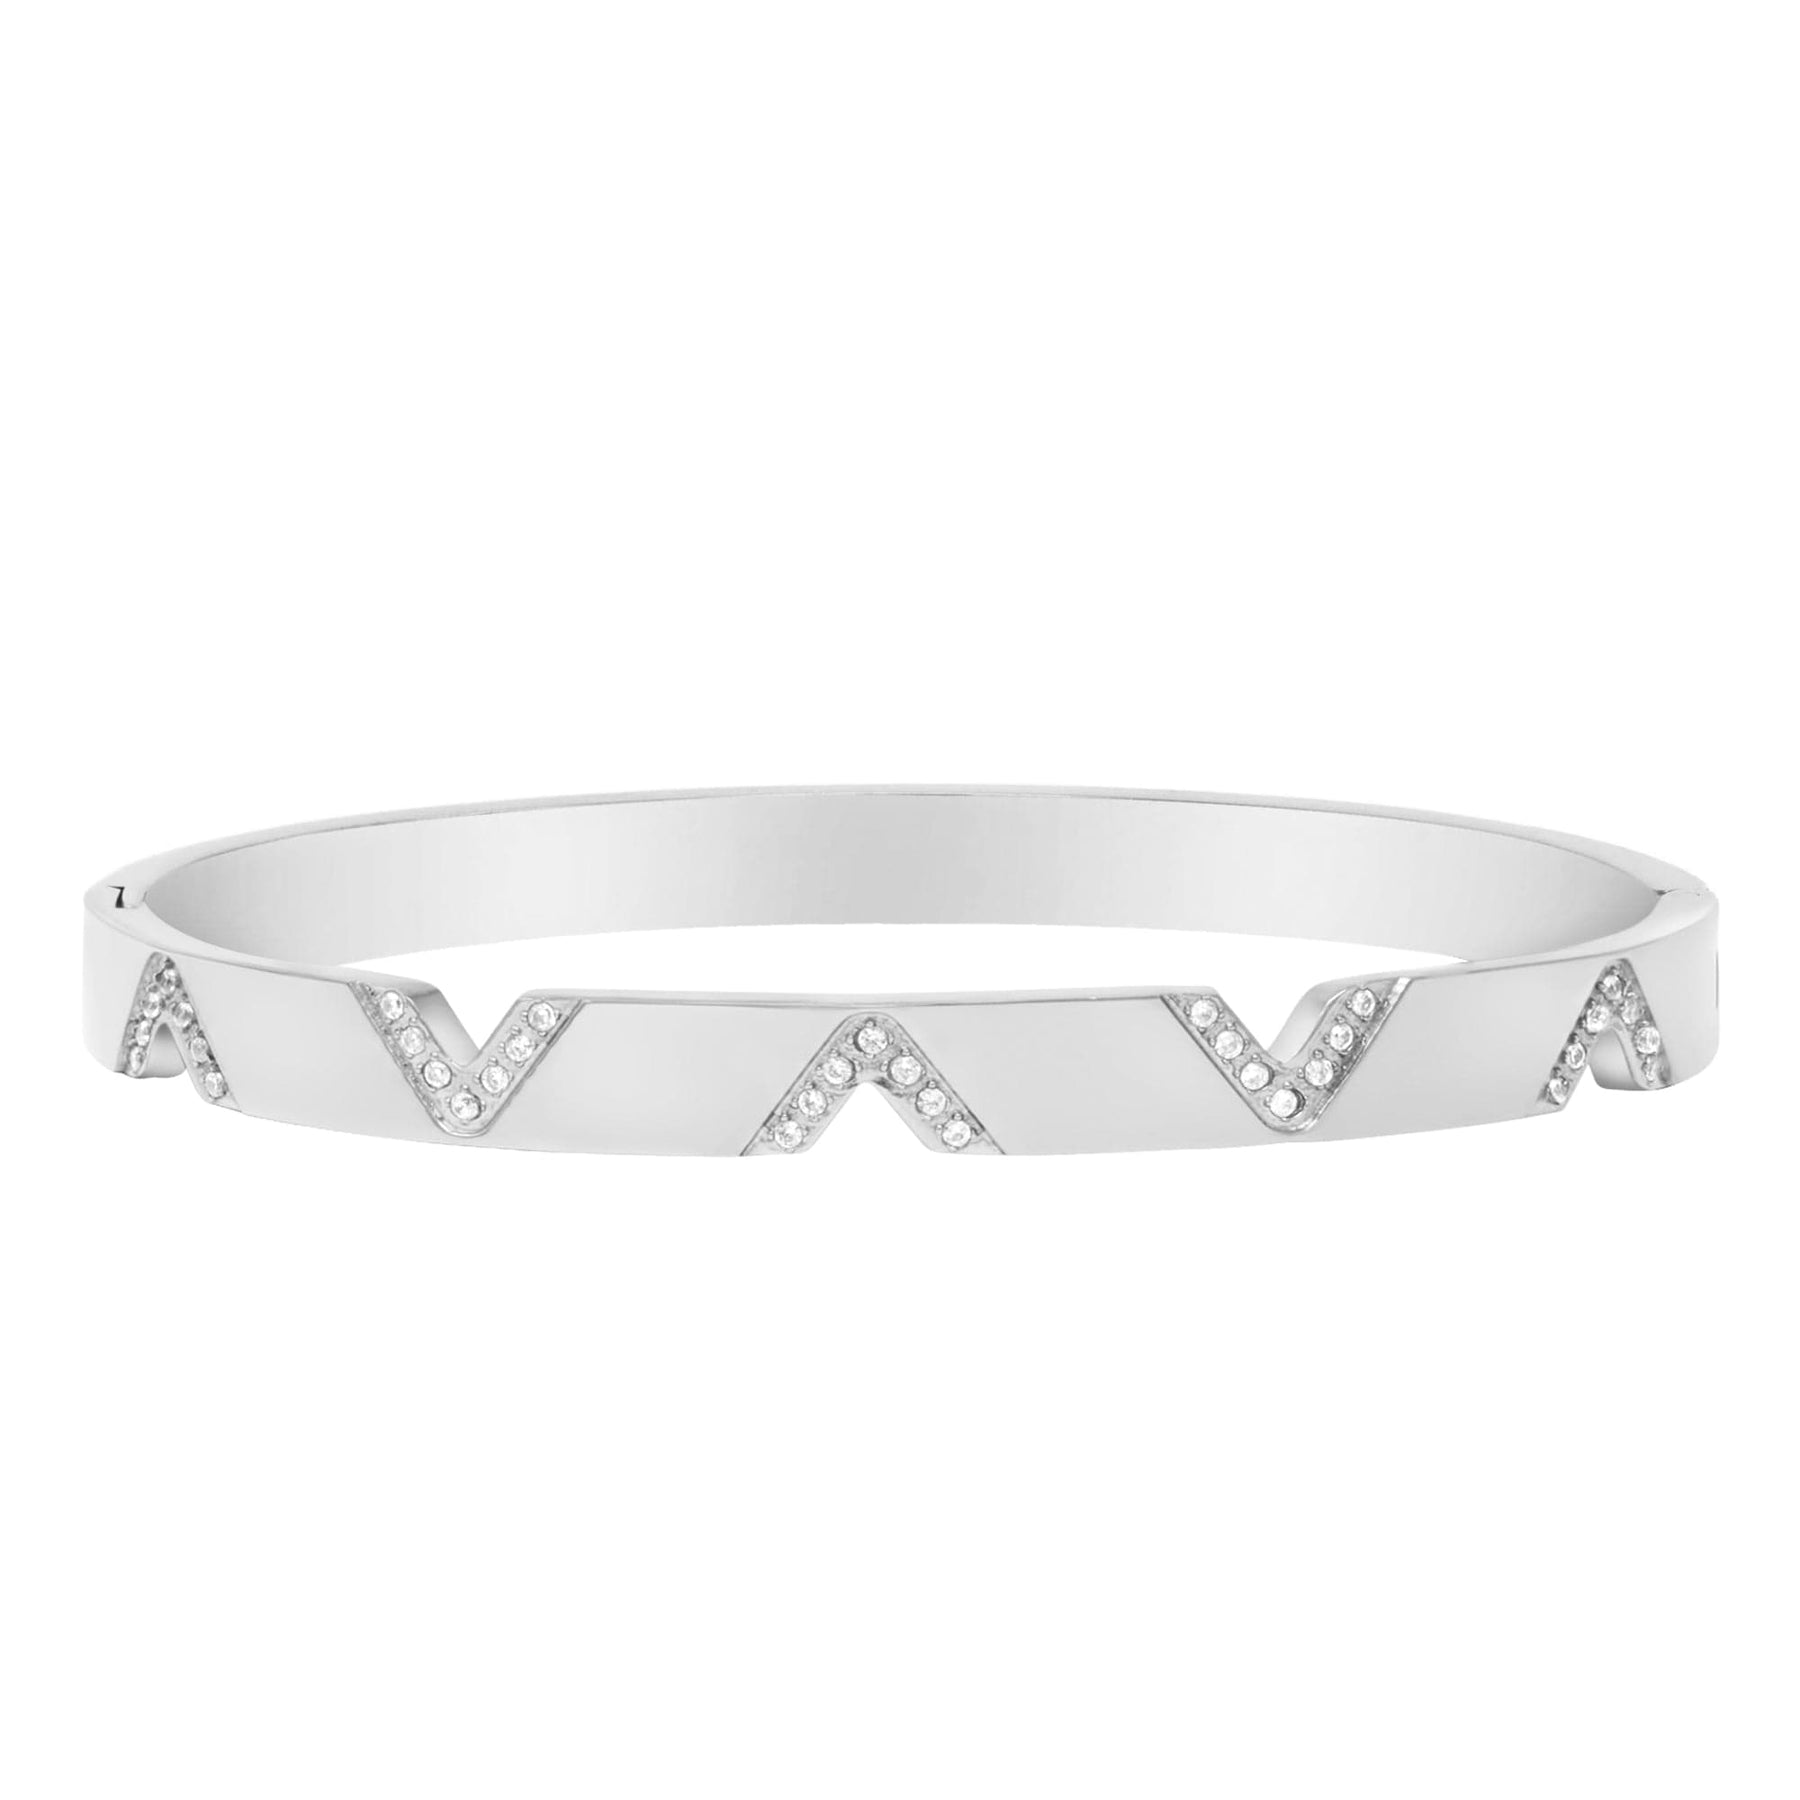 BohoMoon Stainless Steel Cortex Bracelet Silver